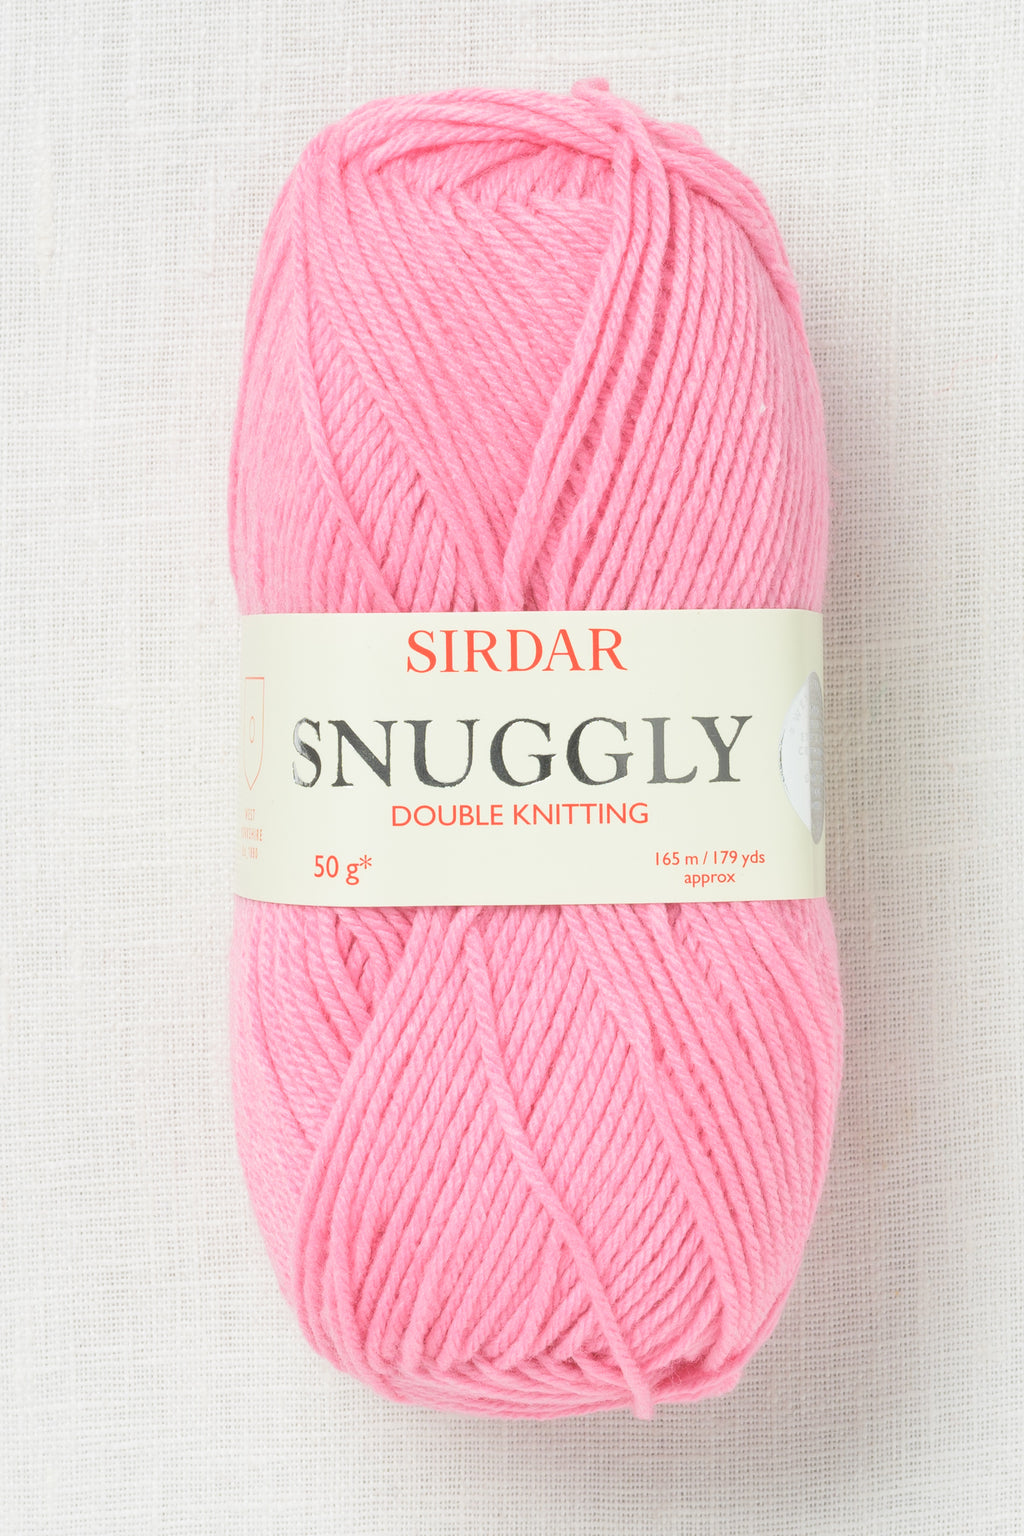 Sirdar Snuggly DK 533 Piglet